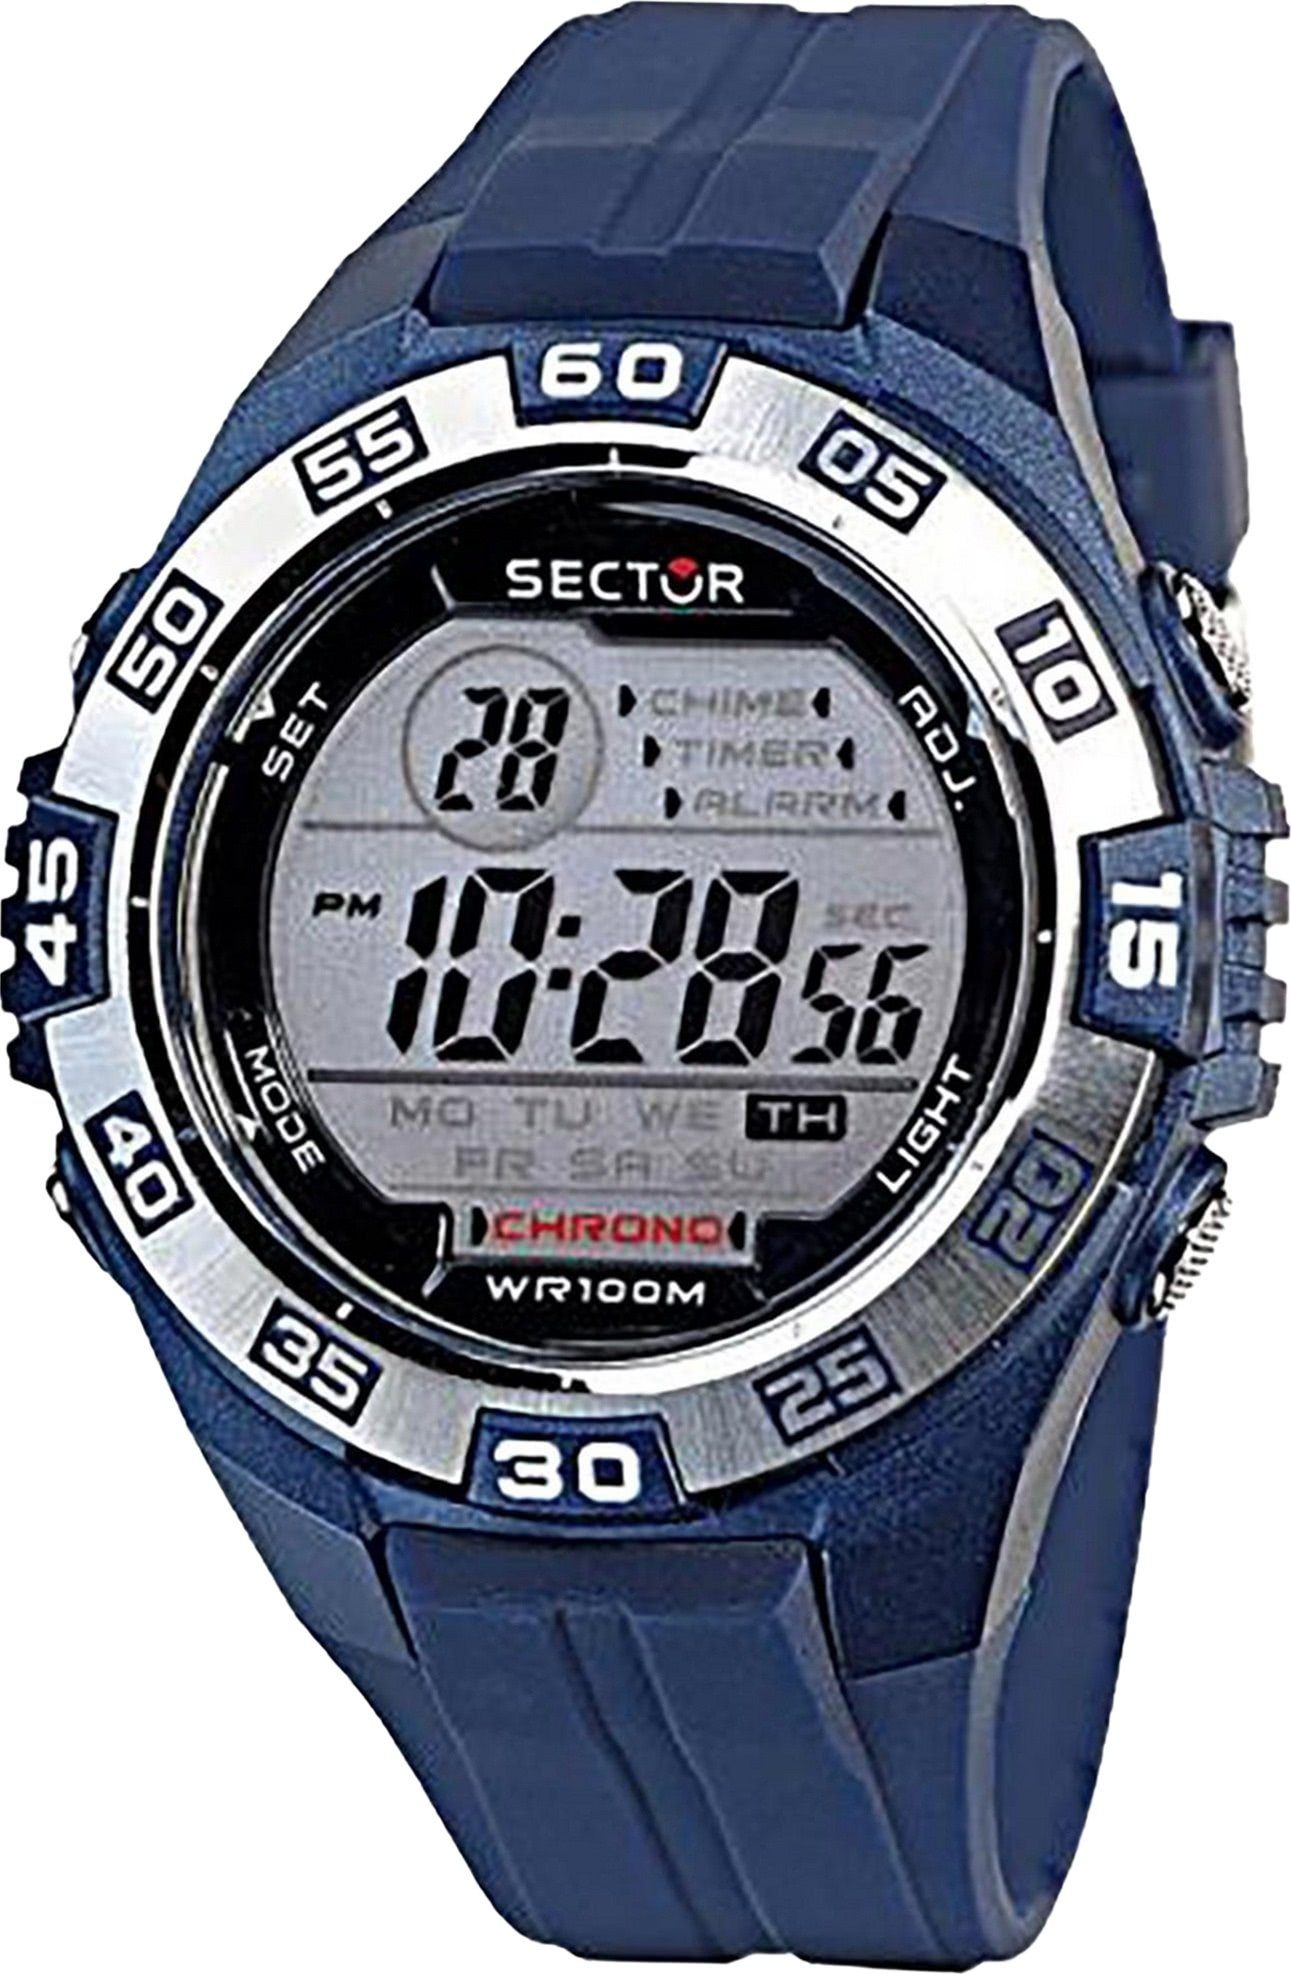 (ca. Chronograph Sector PURarmband blau, rund, Herren Fashion Digital, 45mm), groß Armbanduhr Armbanduhr Herren Sector